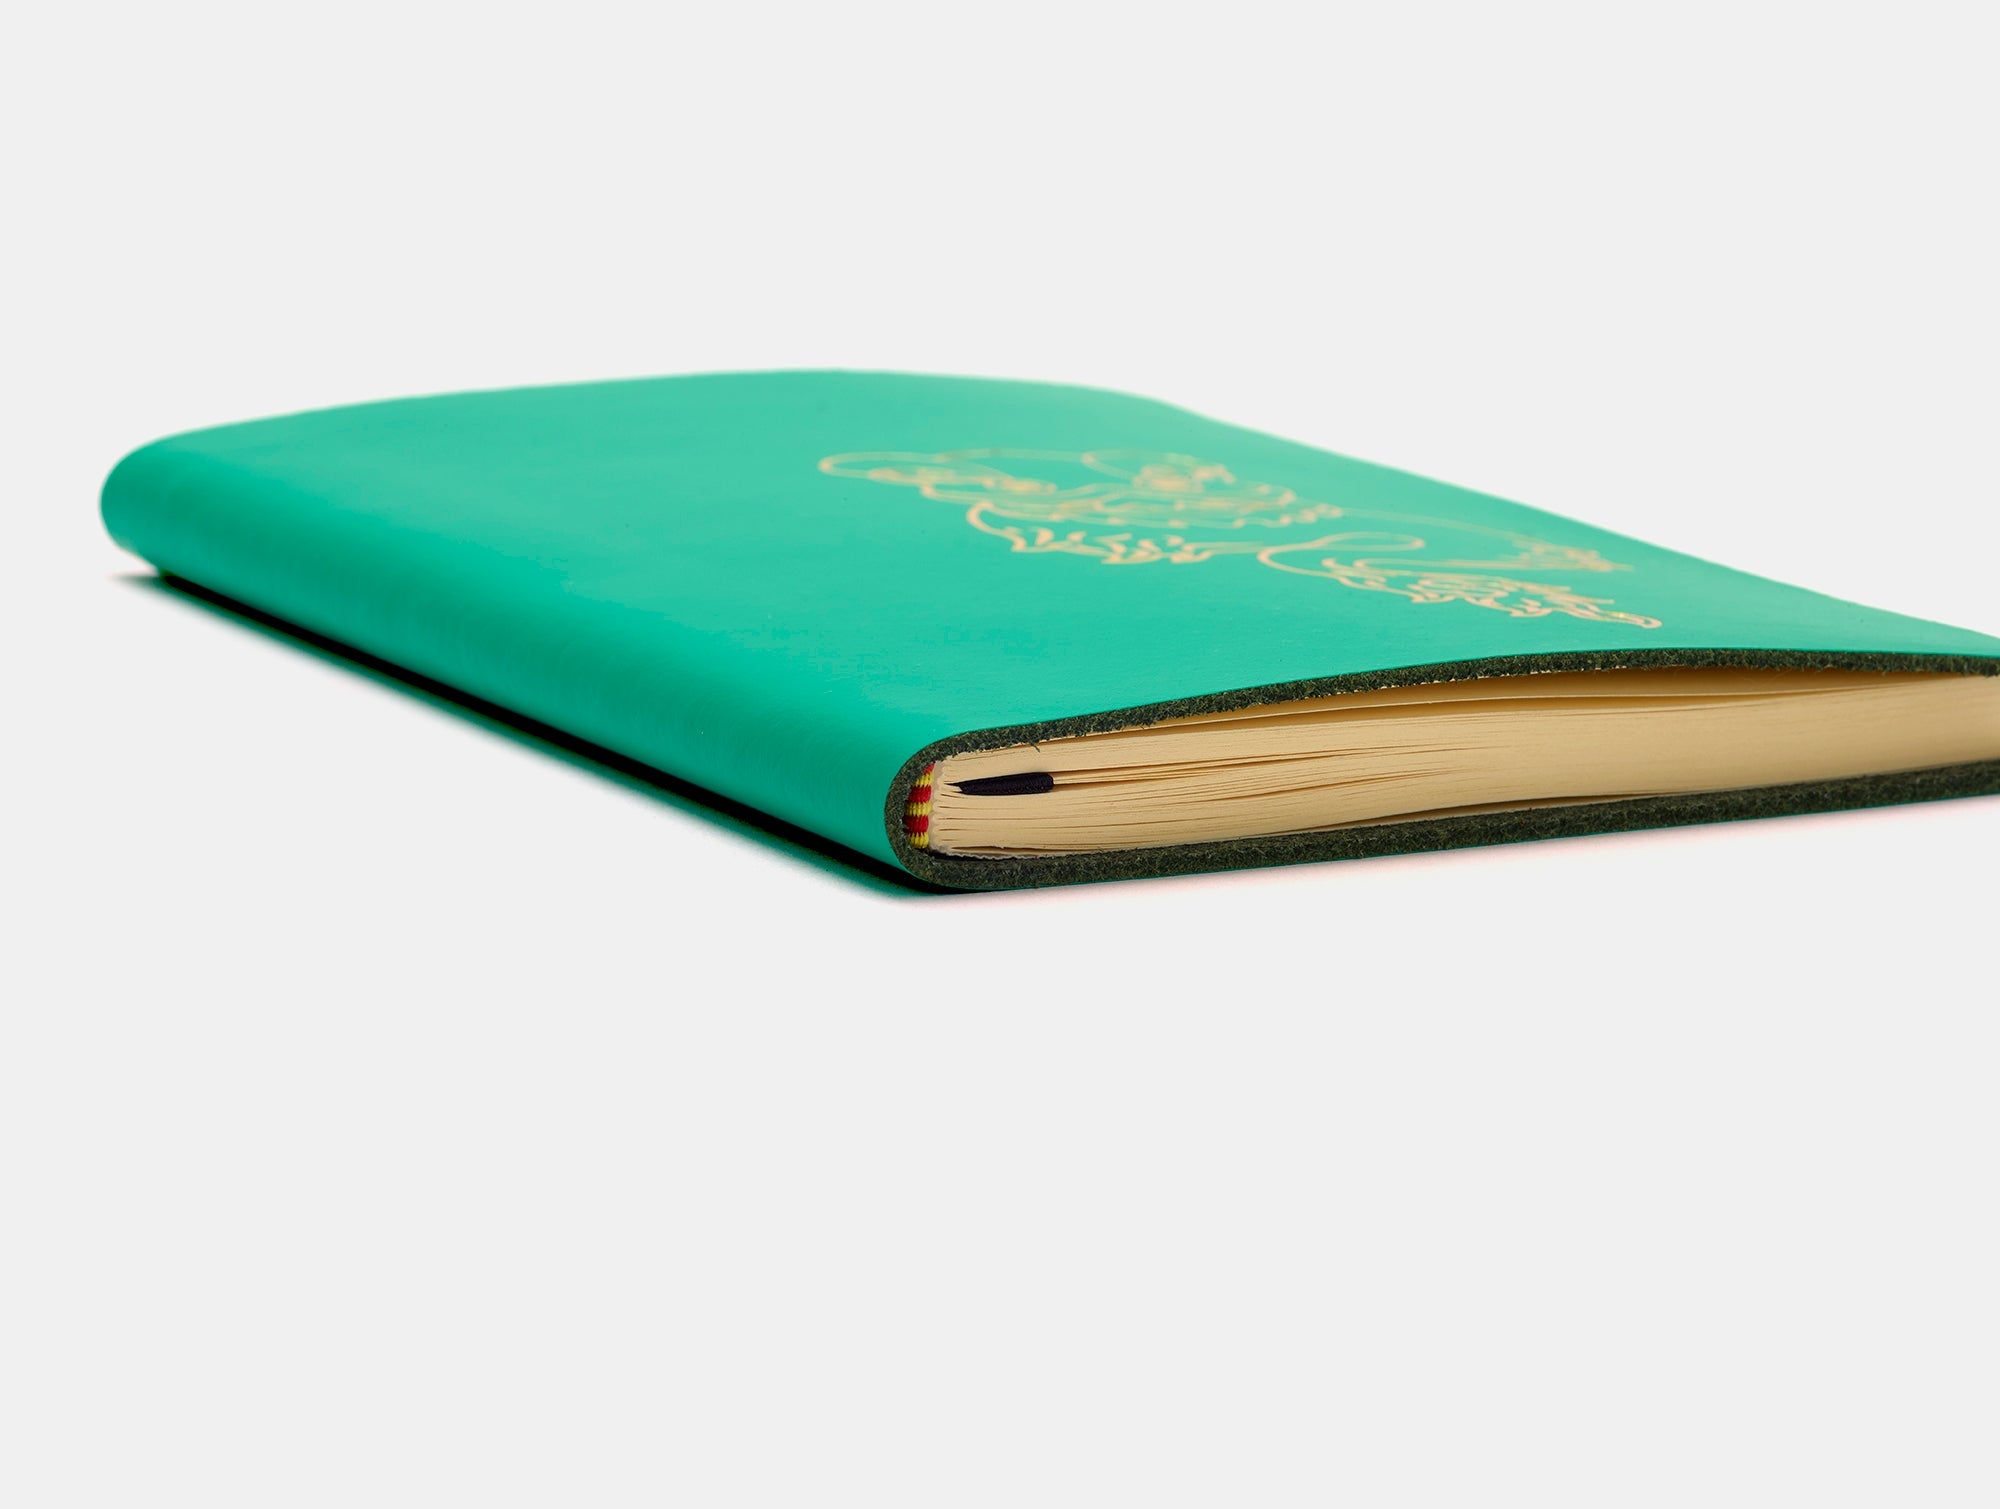 The Lunar New Year A6 Notebook - Emerald Green - The Cambridge Satchel Company EU Store